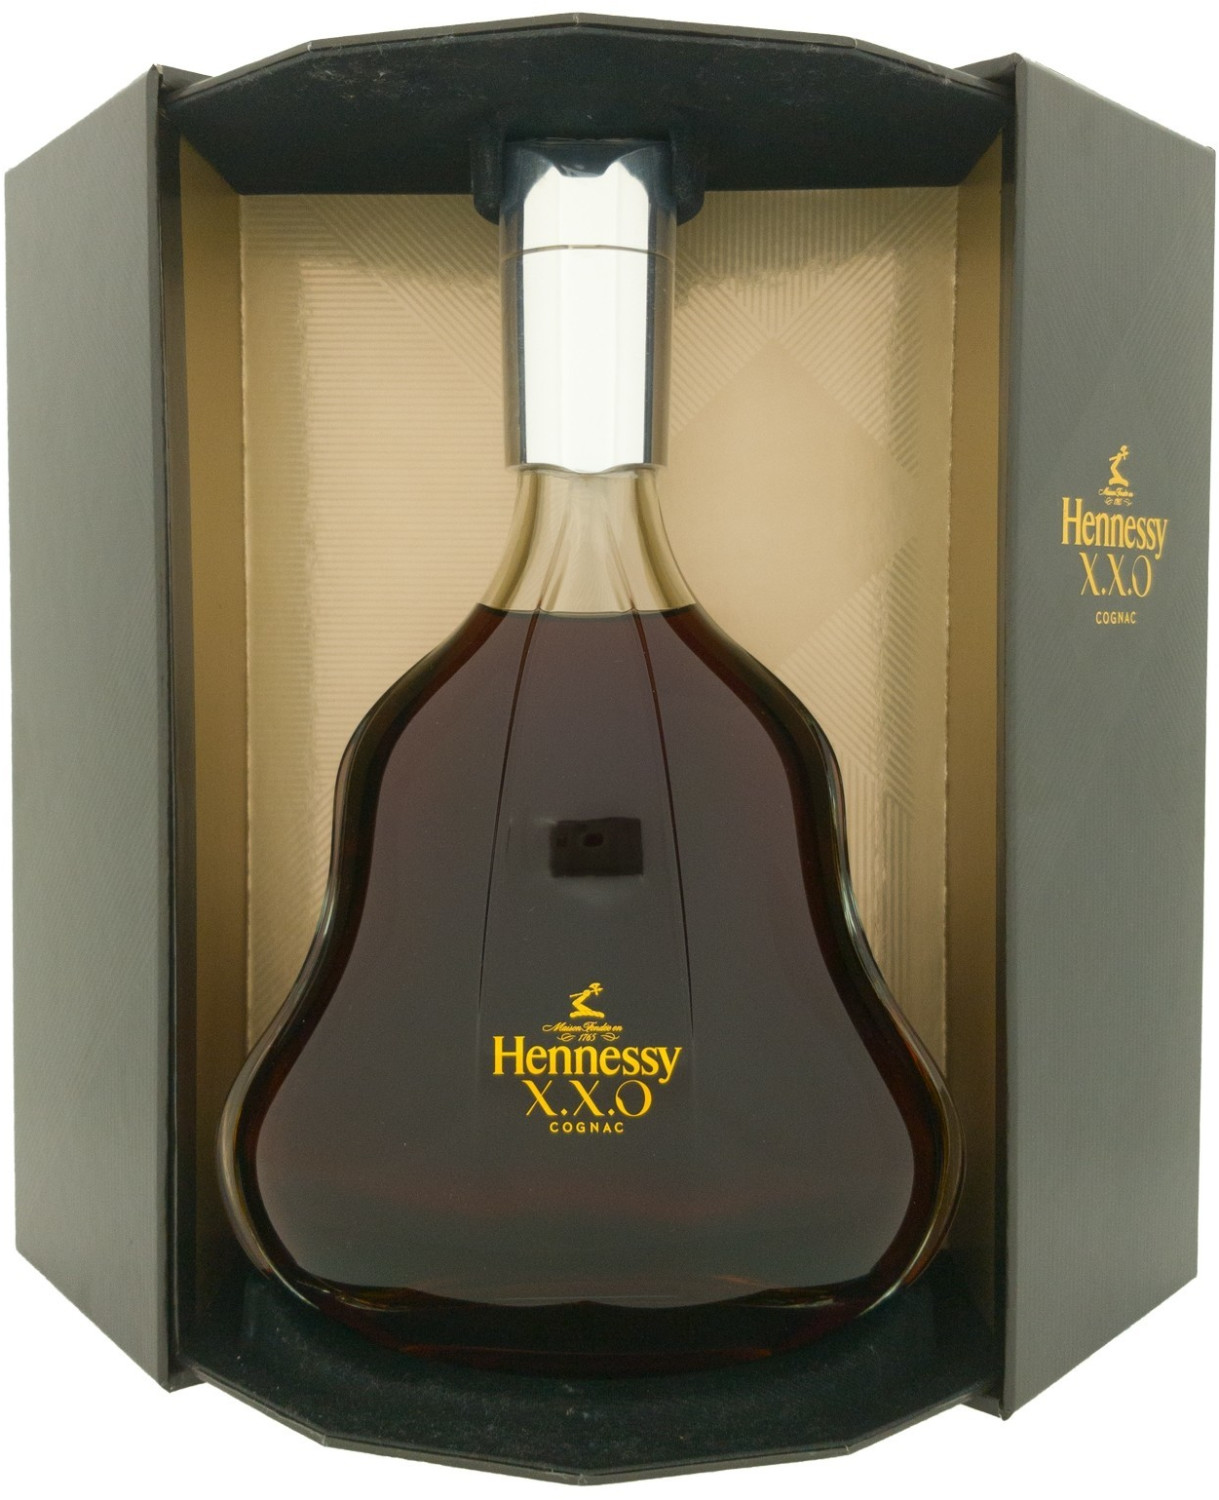 1000ml | 559,90 GB Hennessy bei XXO + Preisvergleich ab 40% €